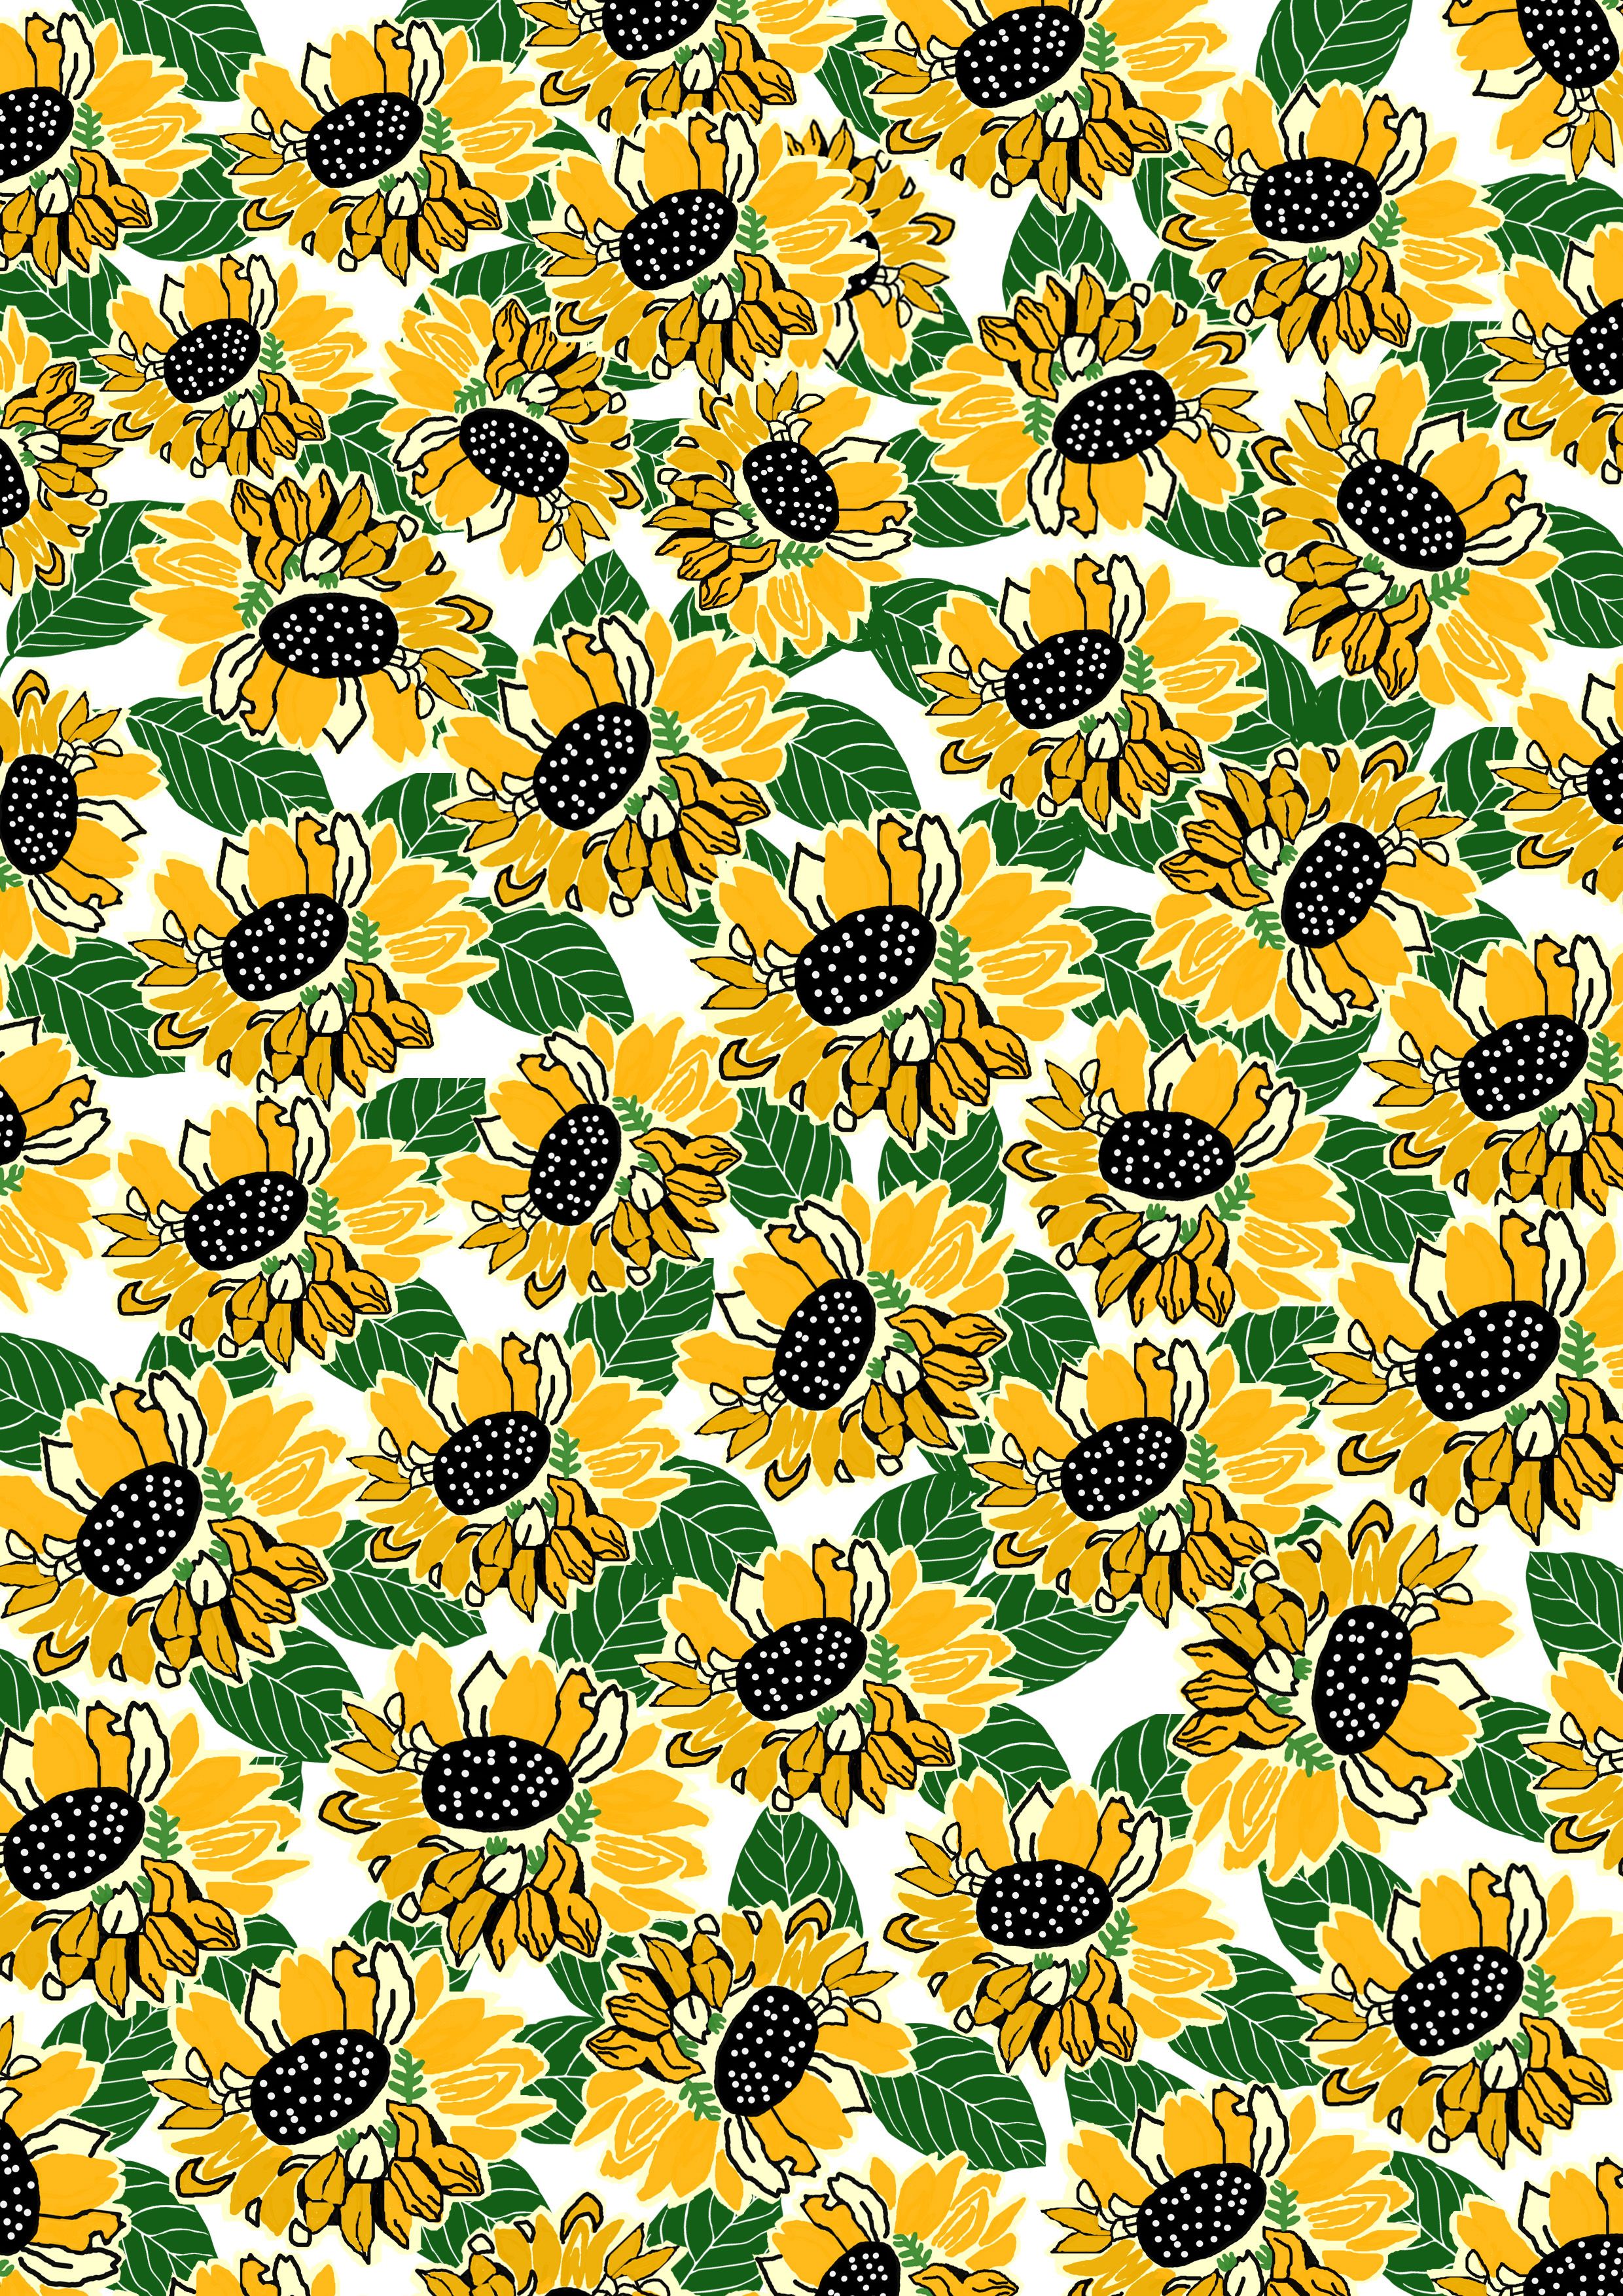 wallpaper pattern photoshop,sunflower,pattern,yellow,sunflower,flower